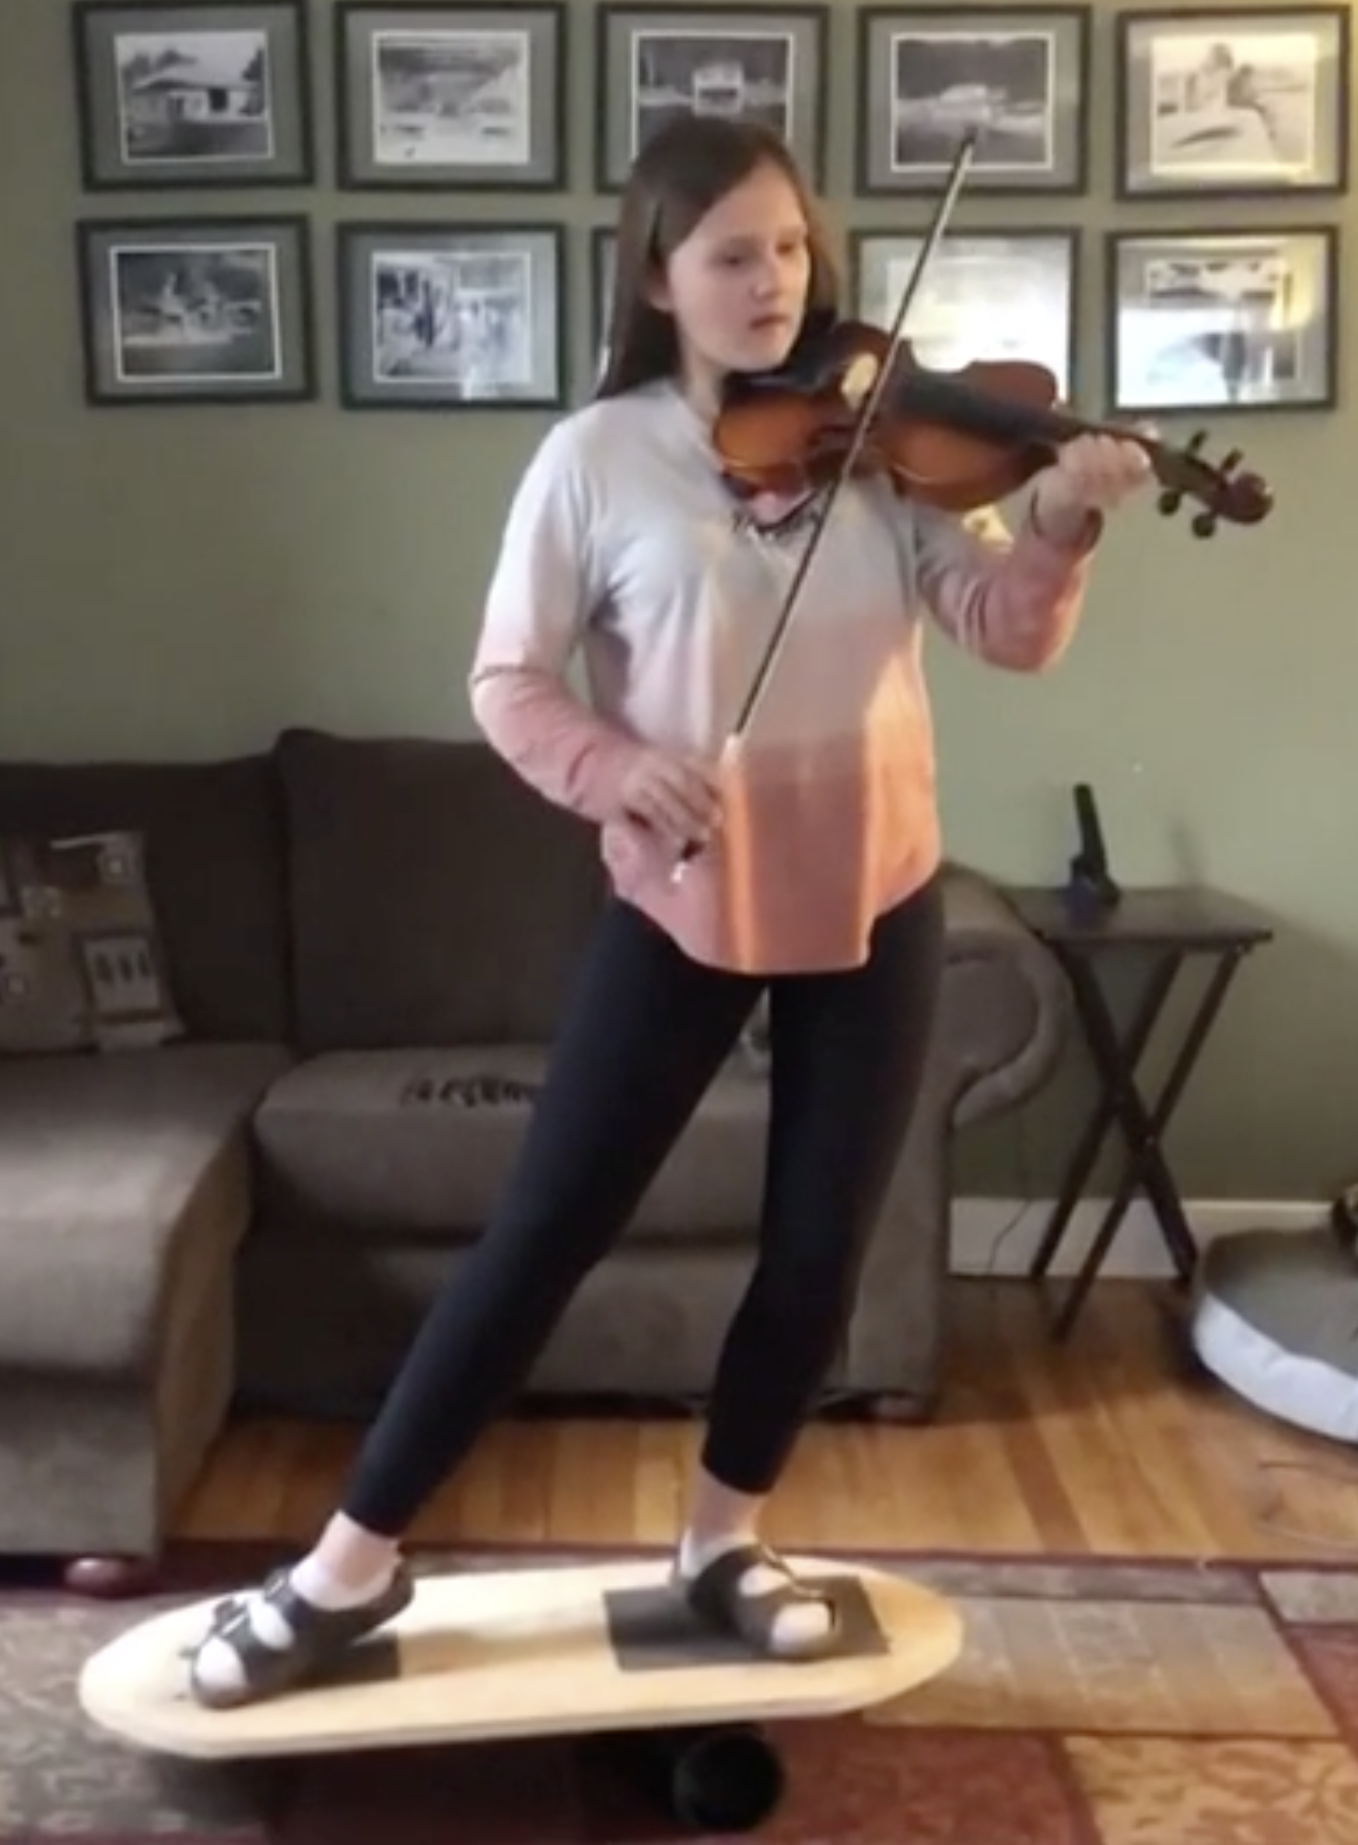 Violinspiel auf balance board Video: CBC/Radio-Canada